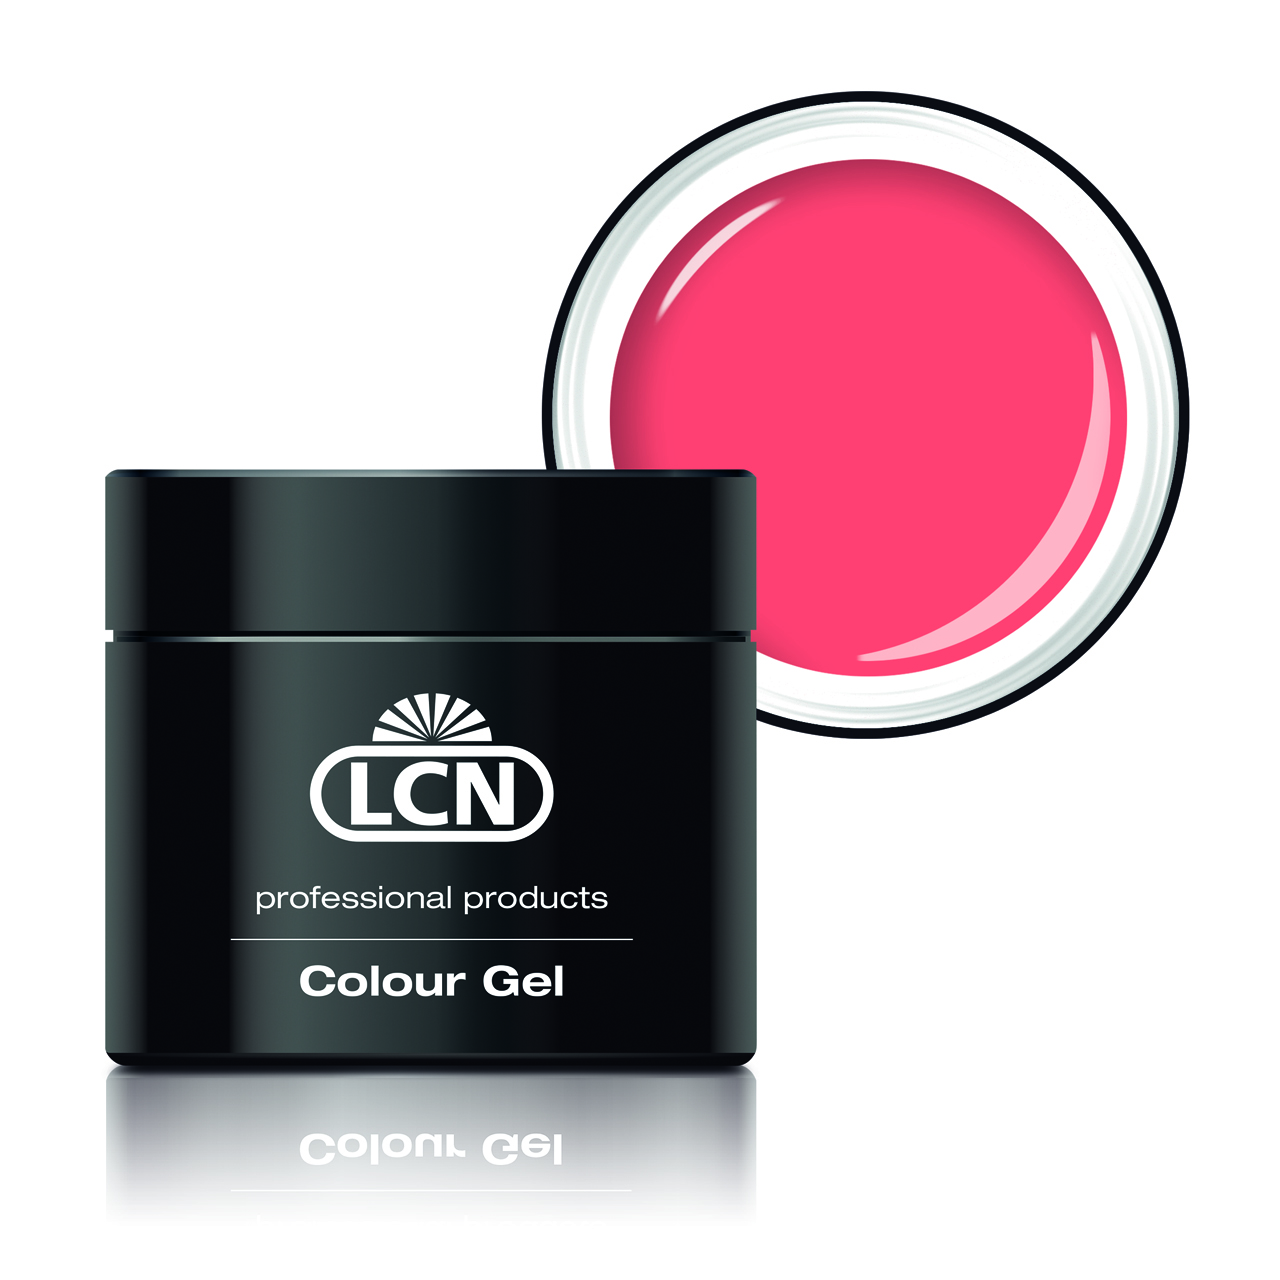 Colour gels coral beach gel u boji 5ml20605 807